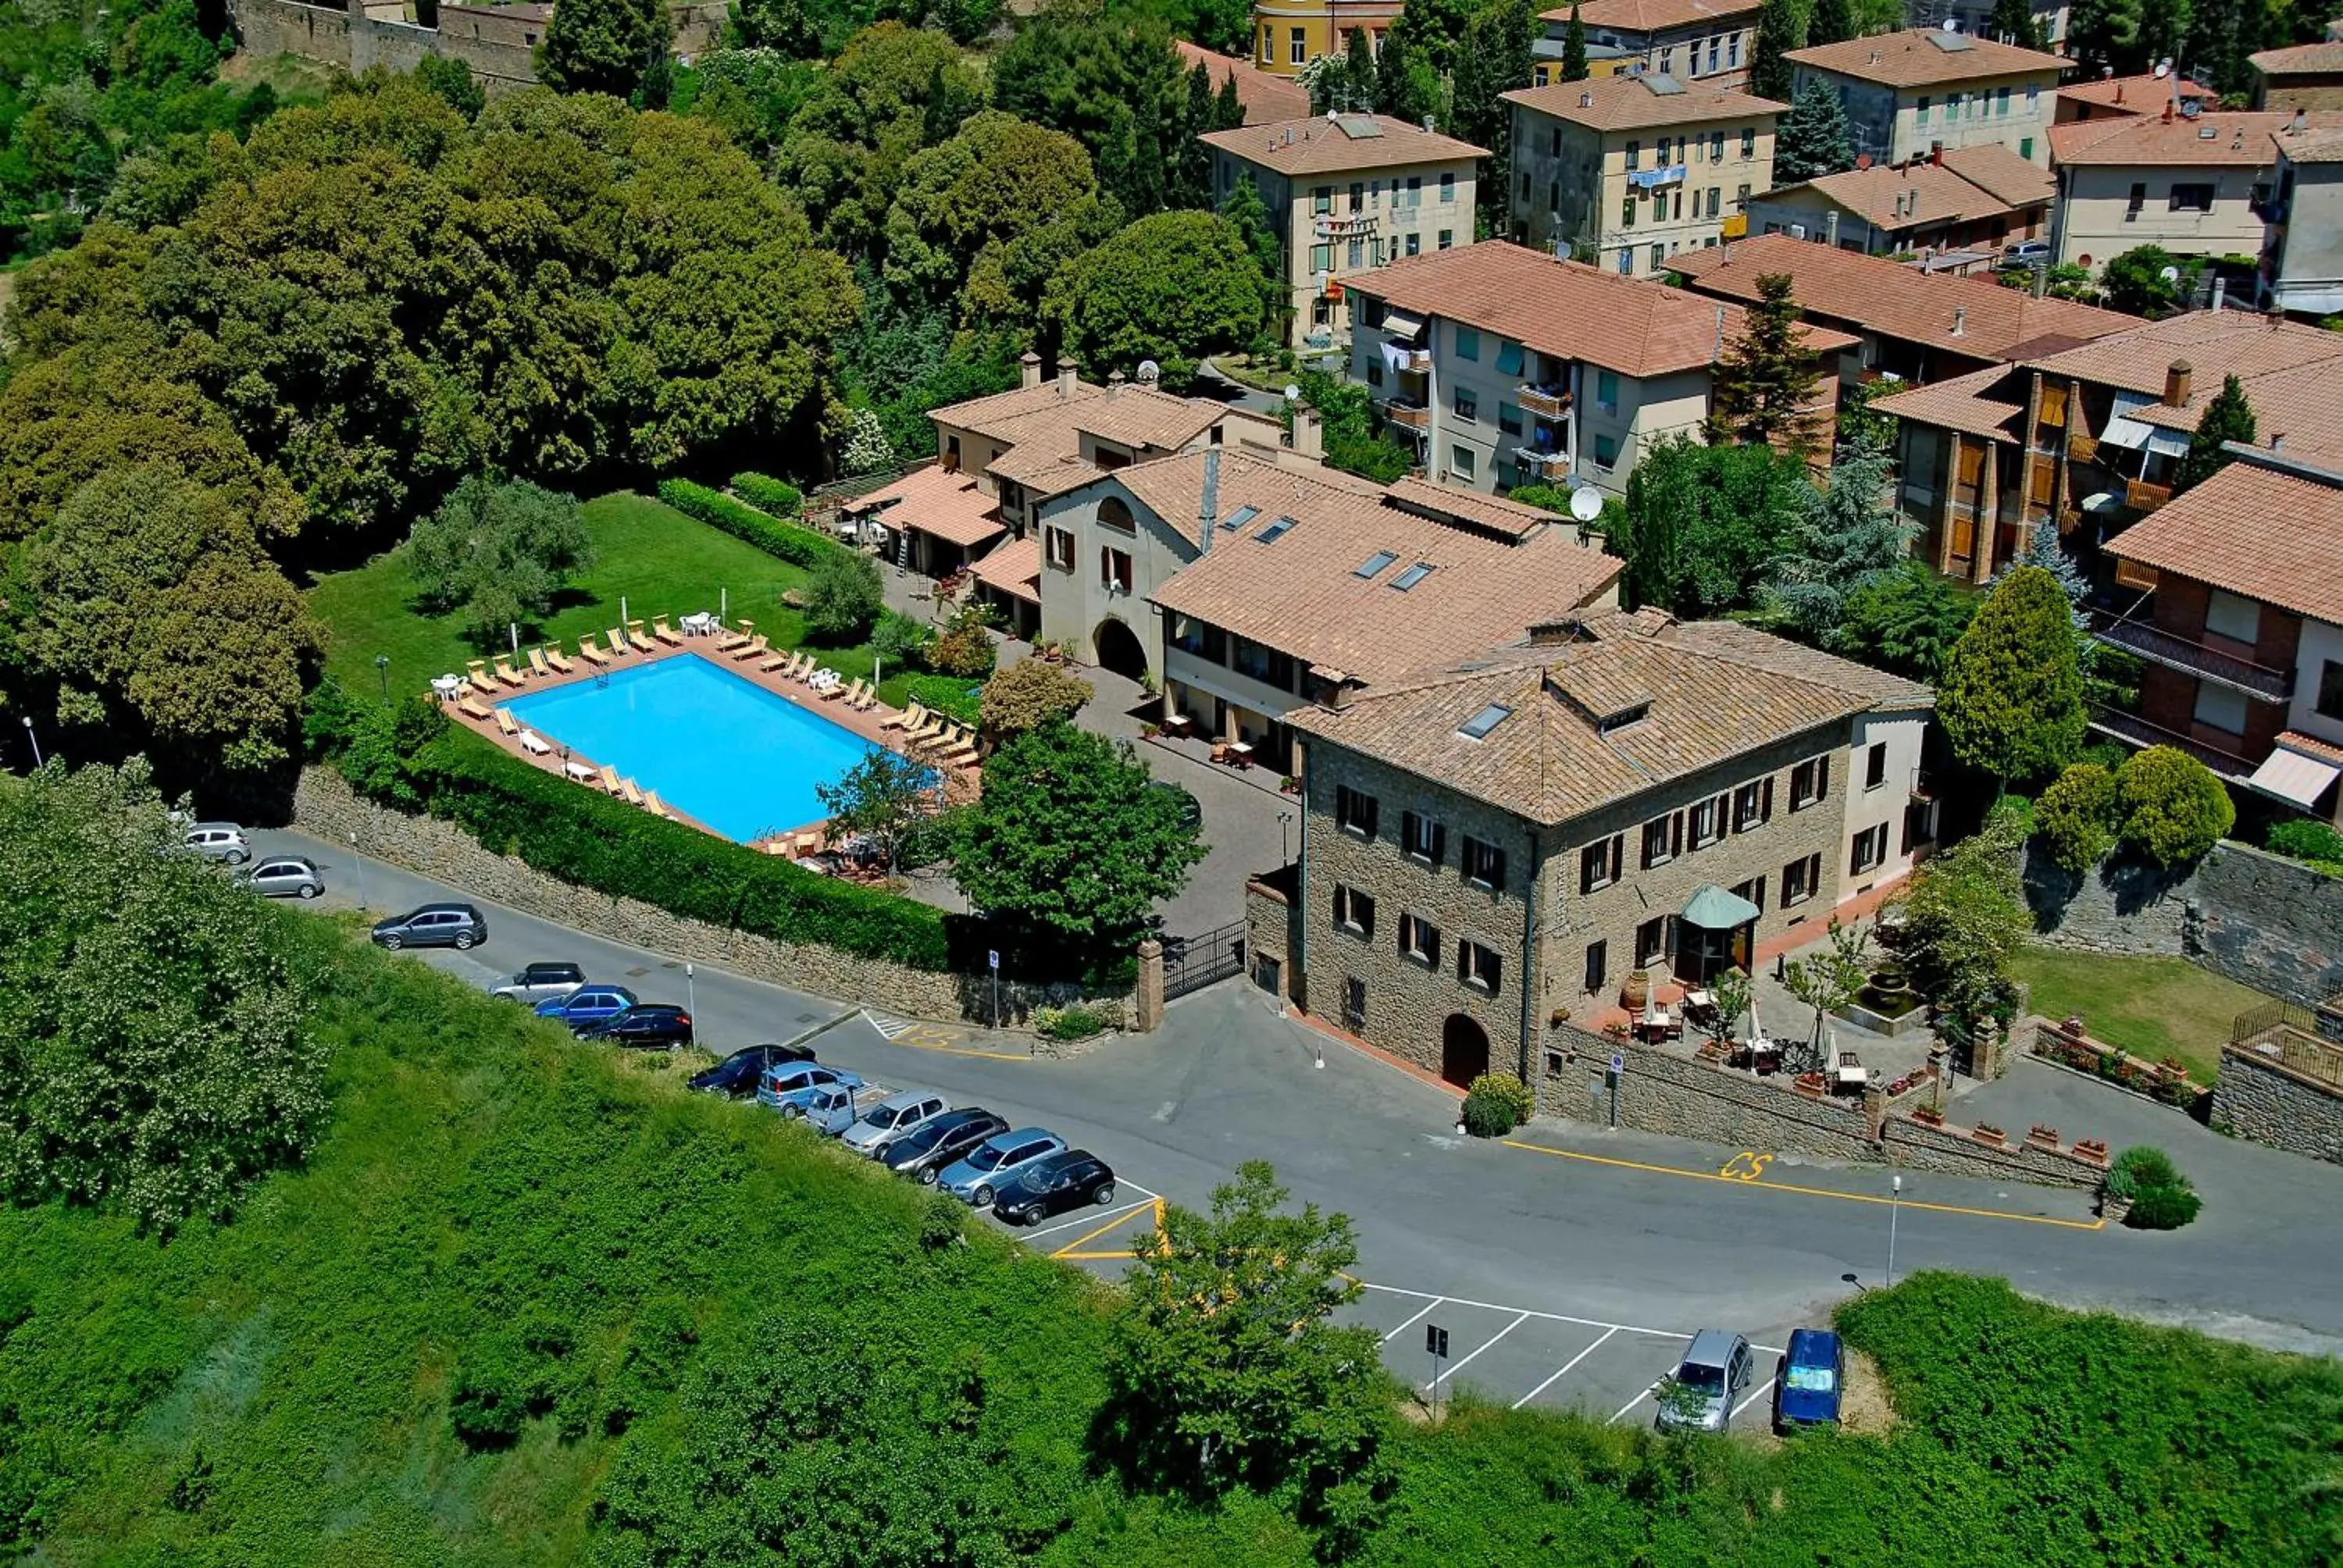 Bird's eye view in Villa Nencini